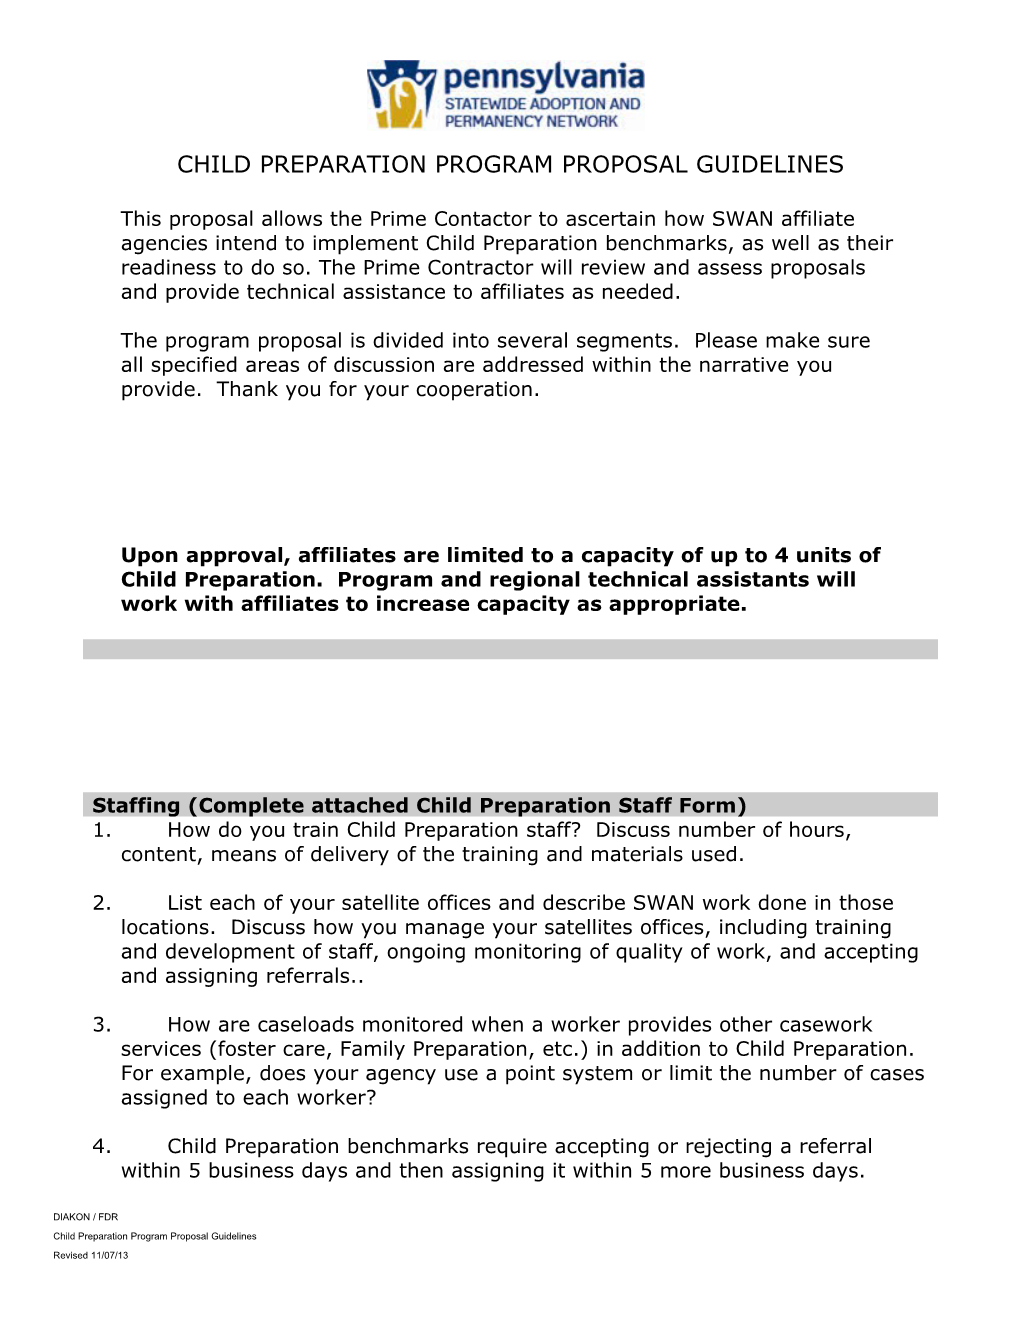 Child Preparationprogram Proposal Guidelines